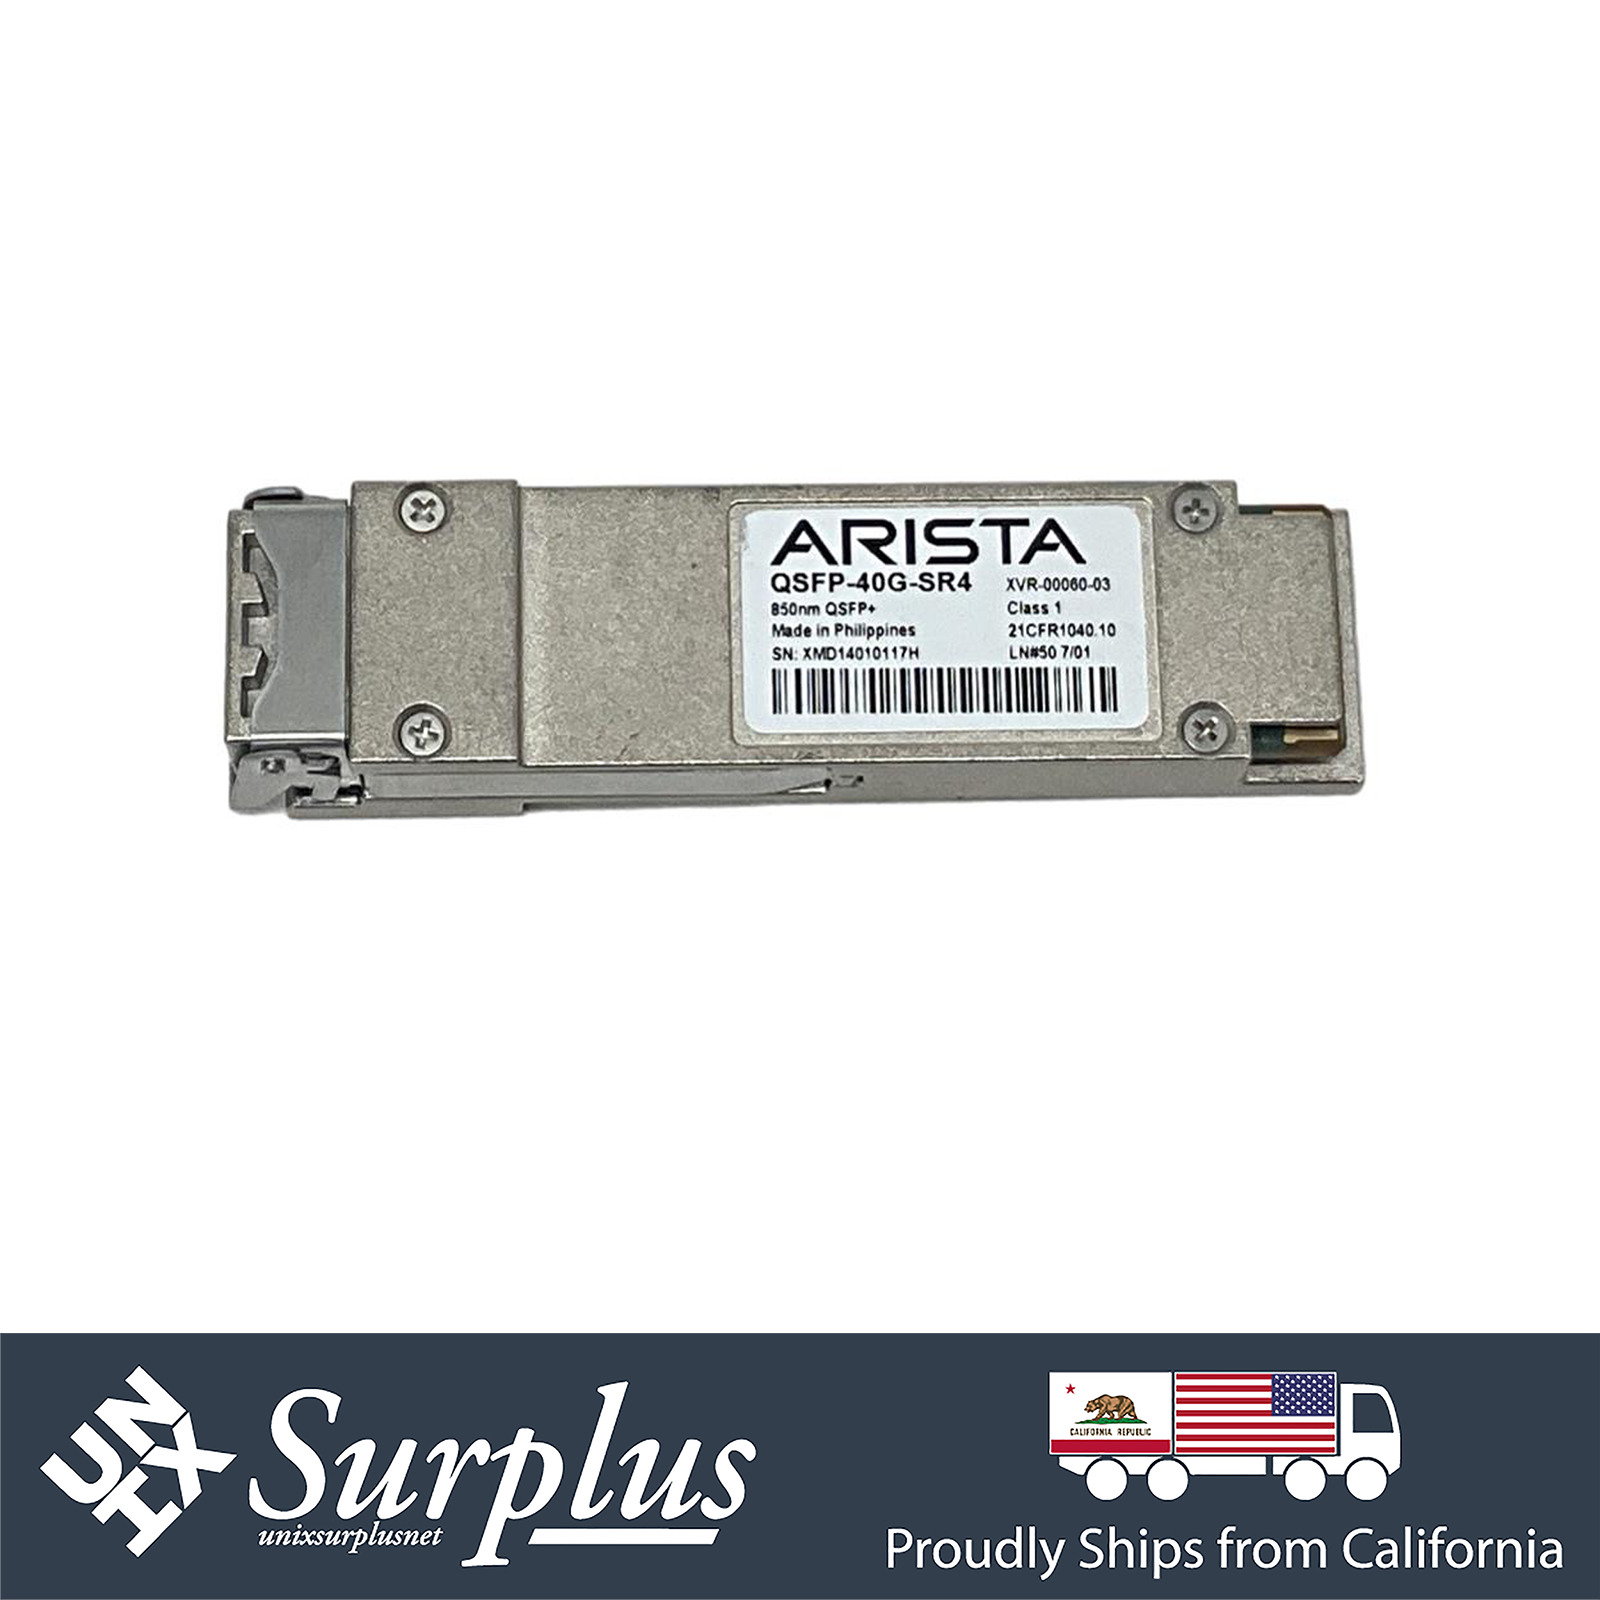 Arista Original 40GbE SR QSFP+ Optic Transceiver MPO QSFP-40G-SR4 Module